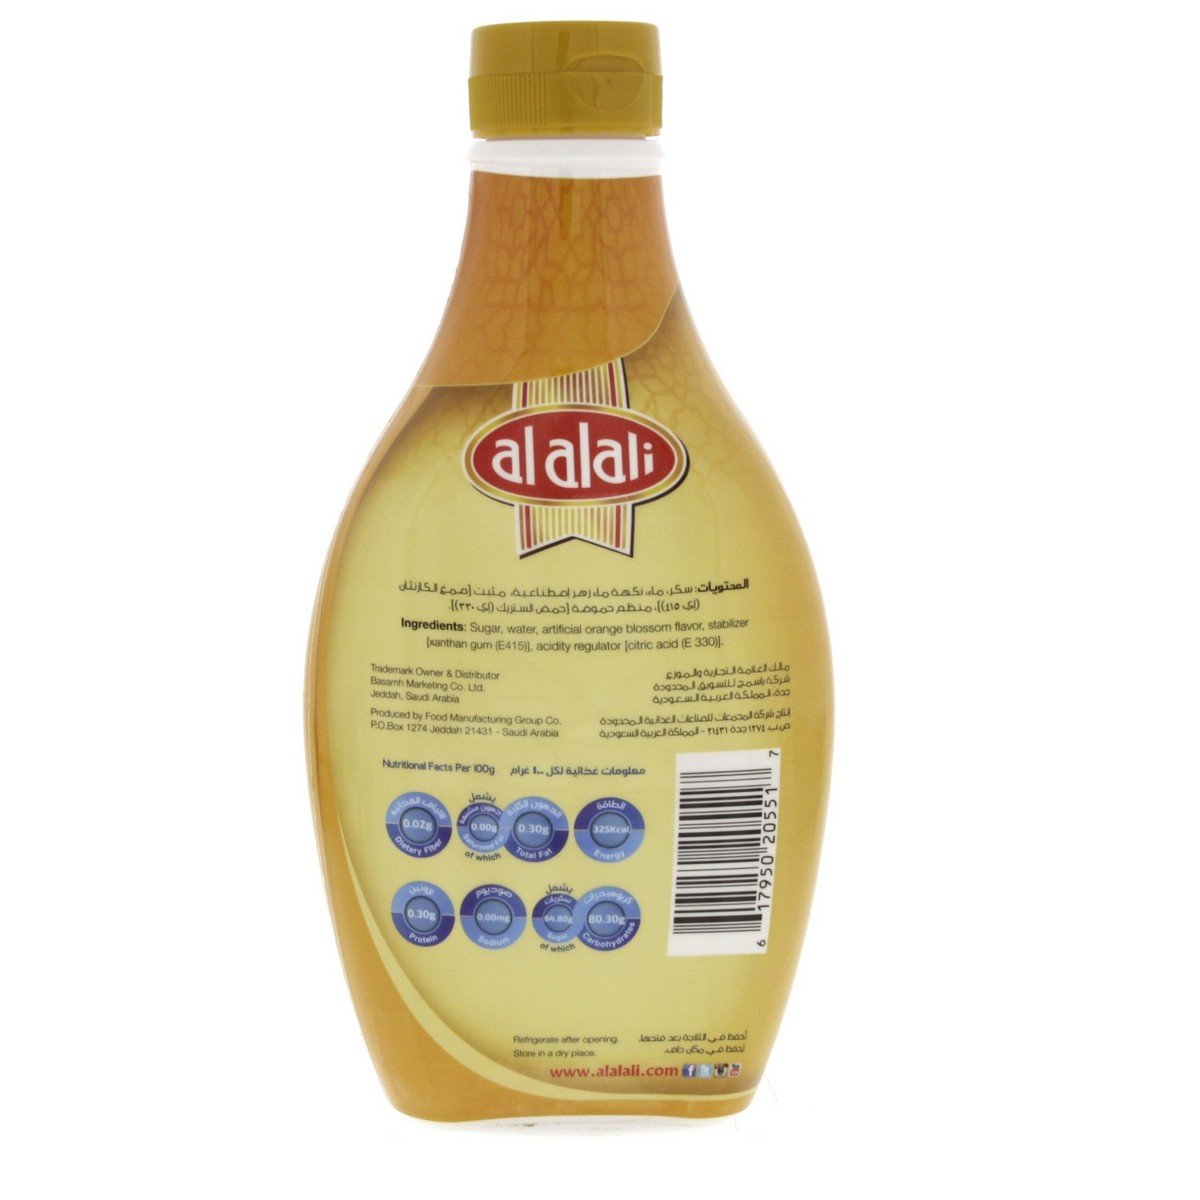 Al Alali Arabic Dessert Syrup Orange Blossom Flavour 675 g